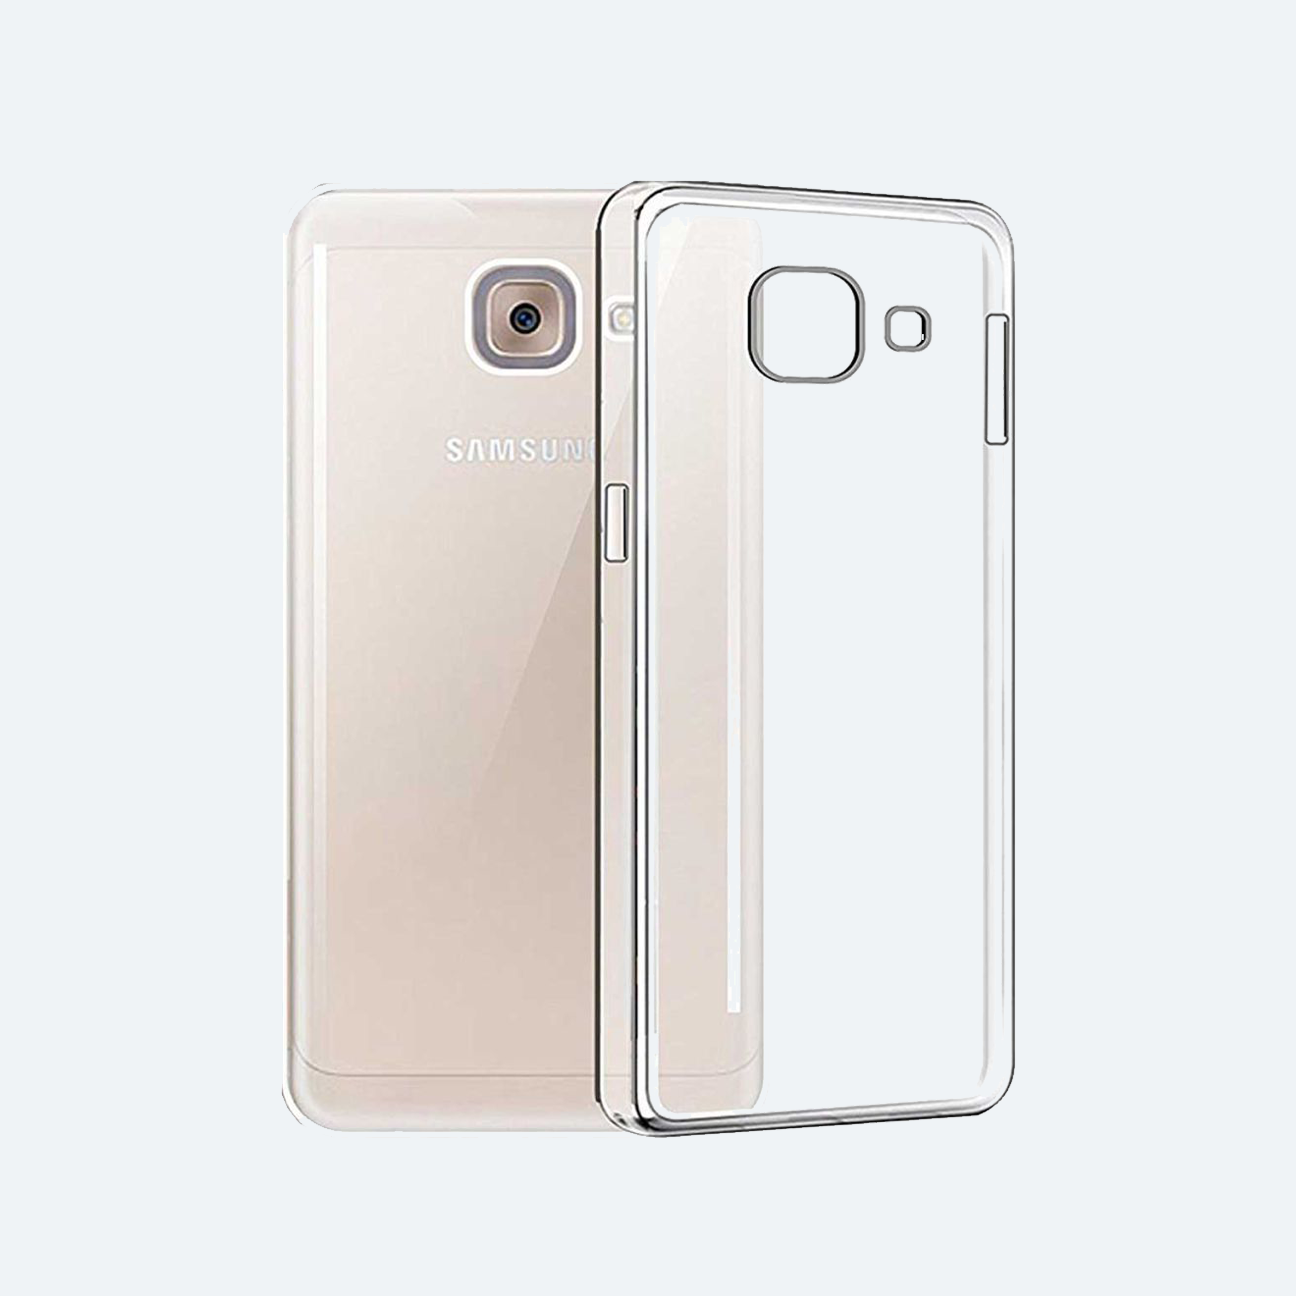 Samsung Galaxy J7 Max Transparent Back Cover